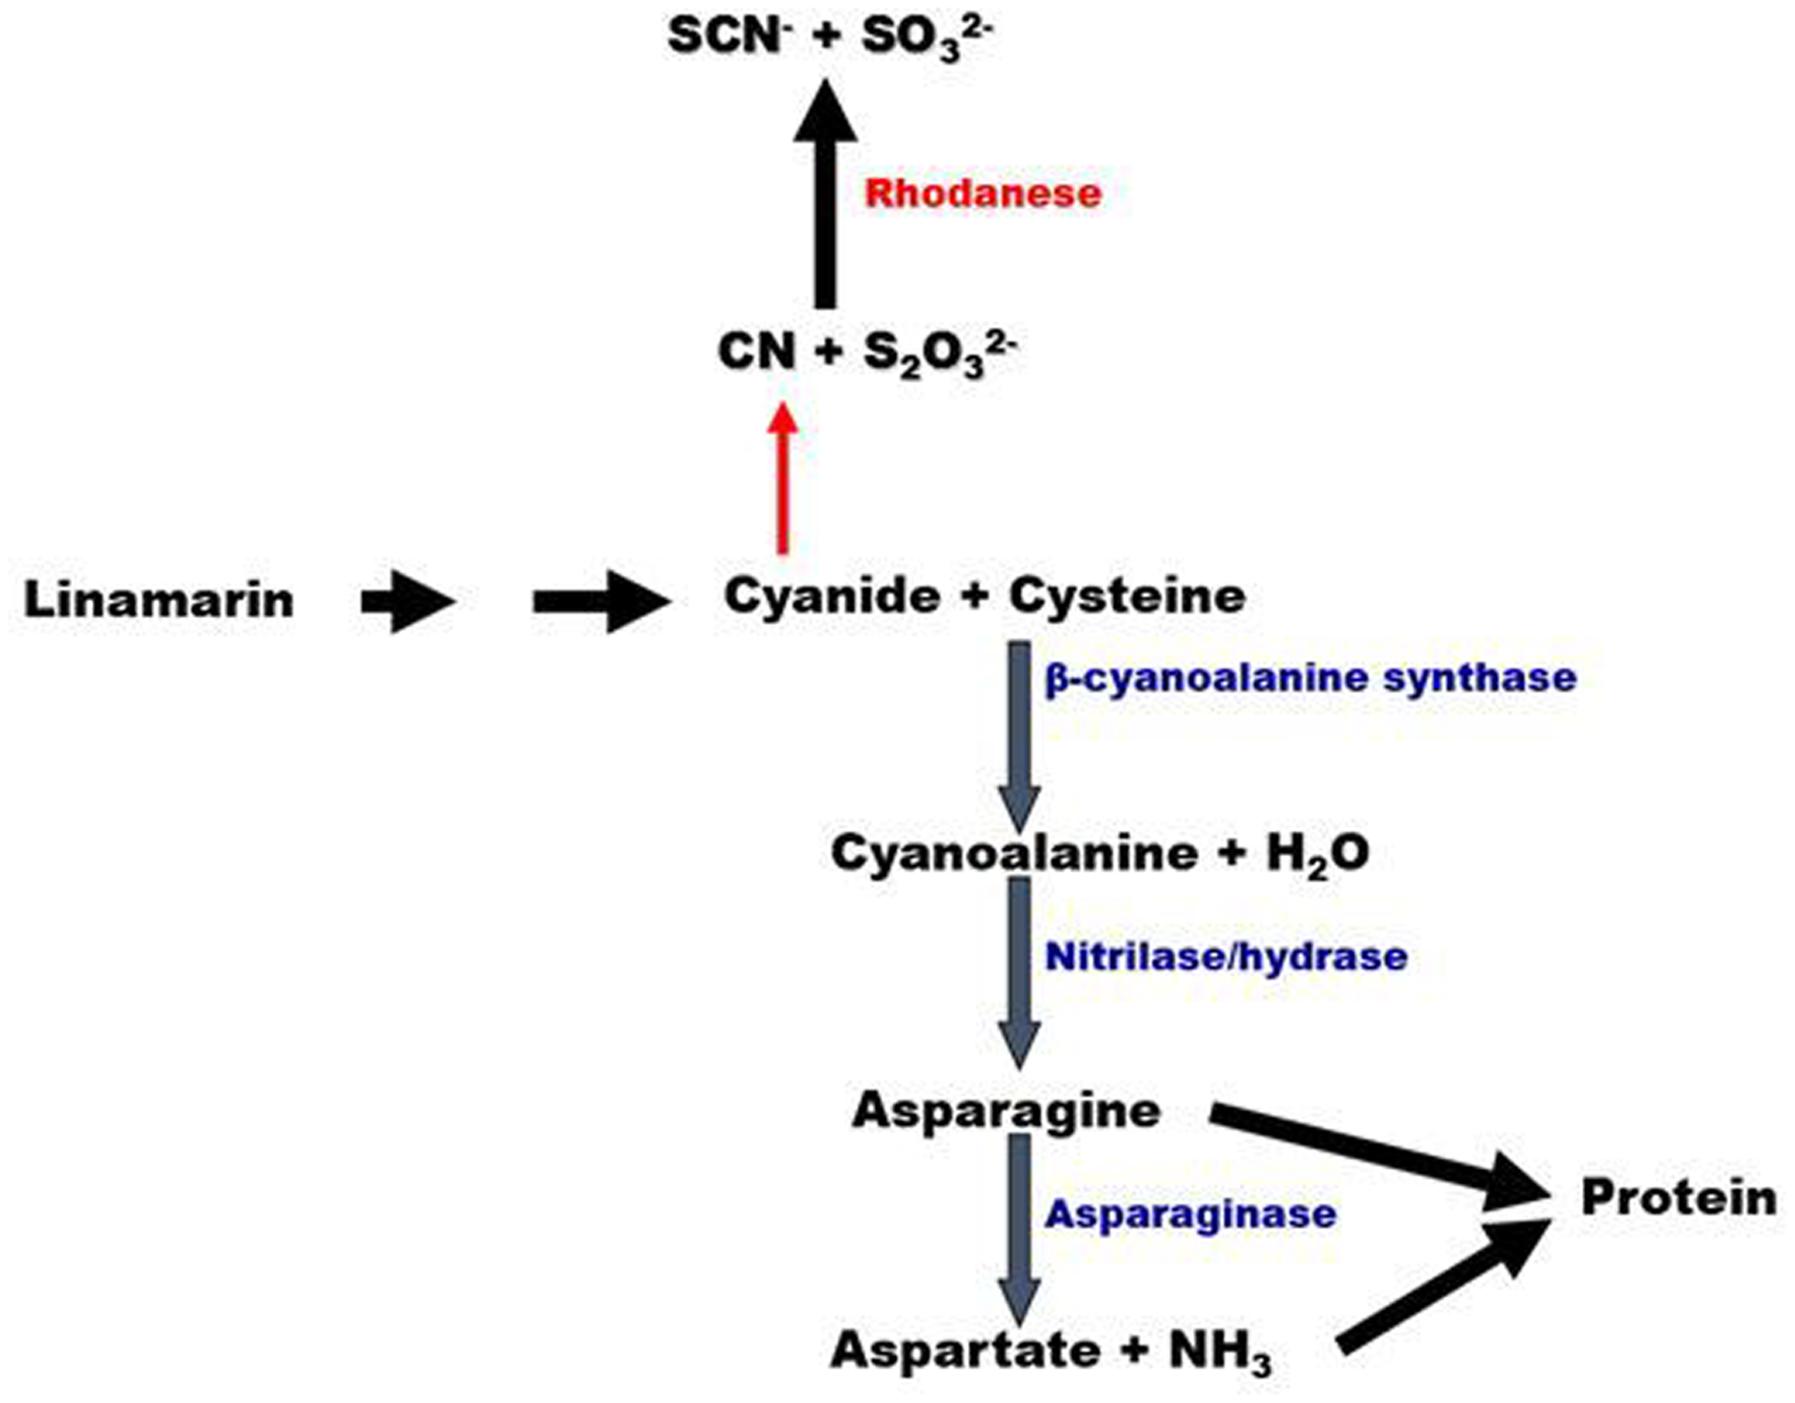 cyanide poisoning antidote mechanism